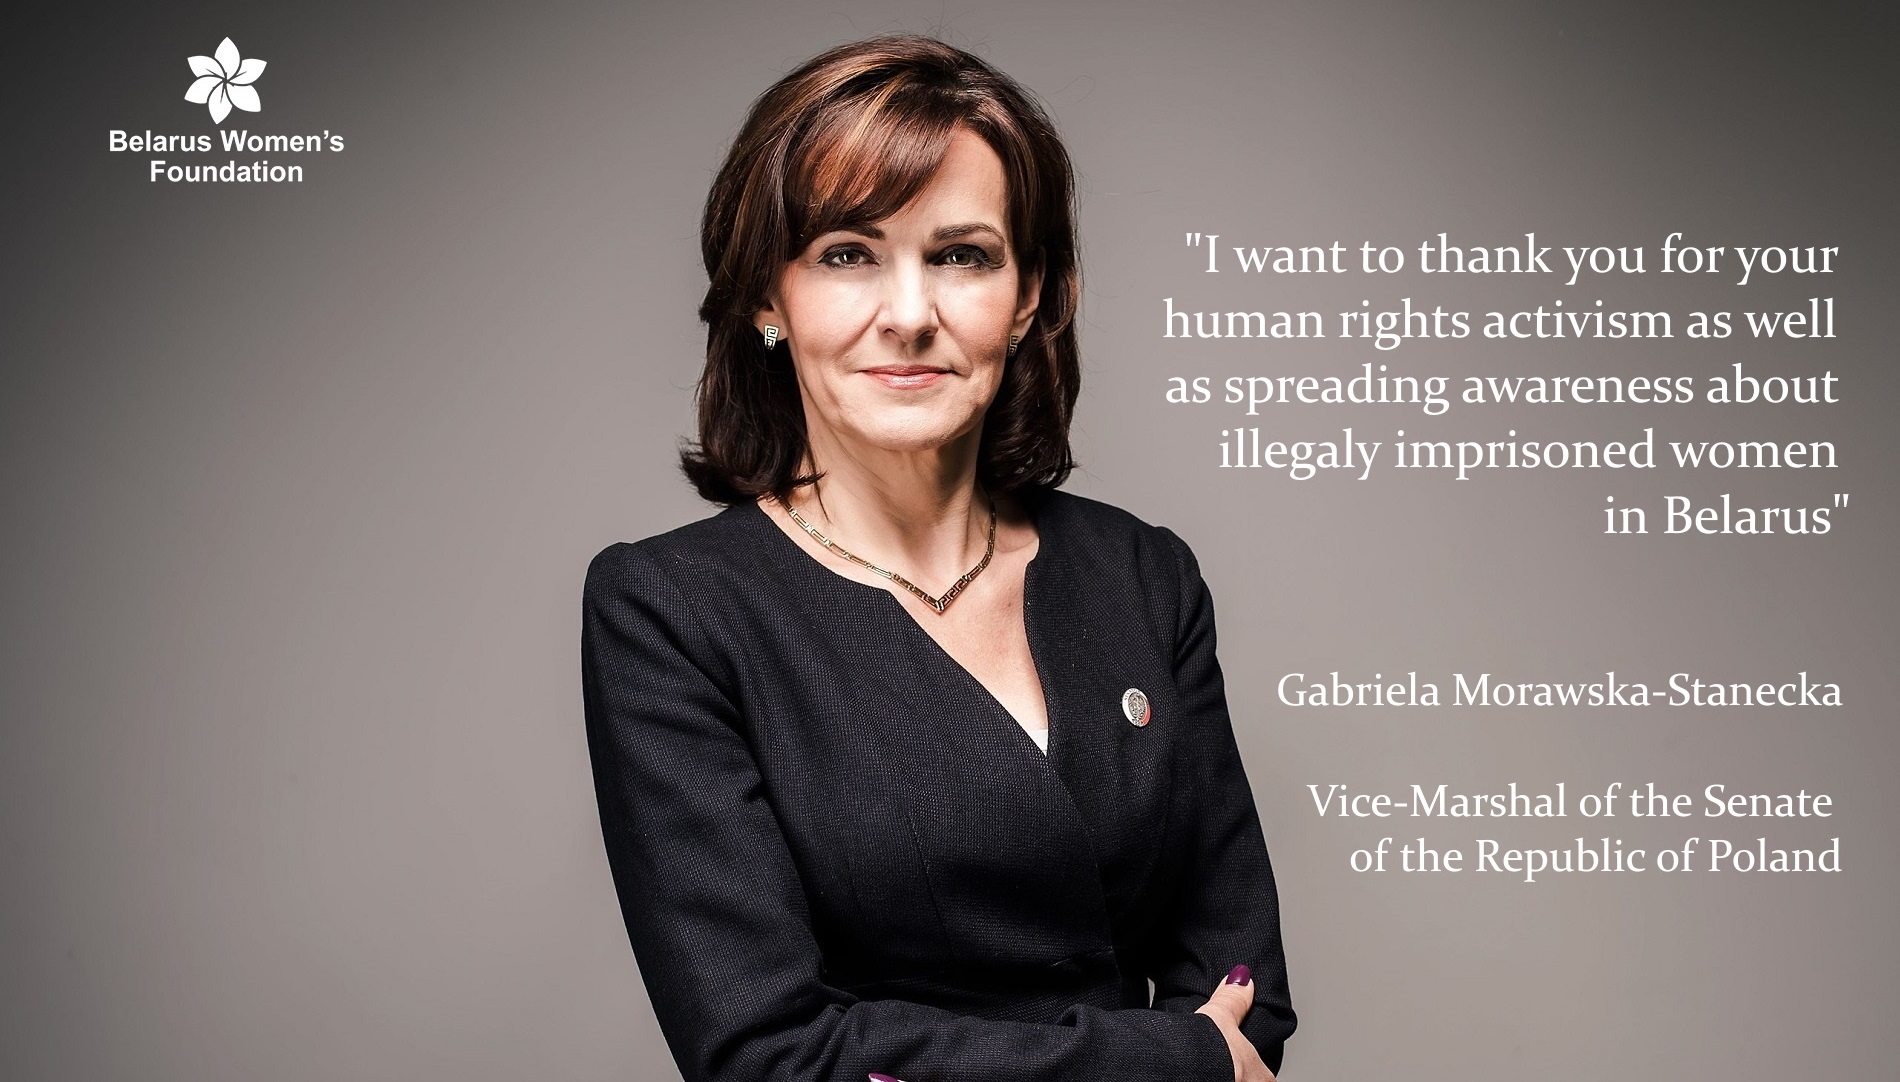 Gabriela Morawska-Stanecka, Vice-Marshal of the Senate of the Republic of Poland,  joined the BWF's campaign #FreeBelarusWomen